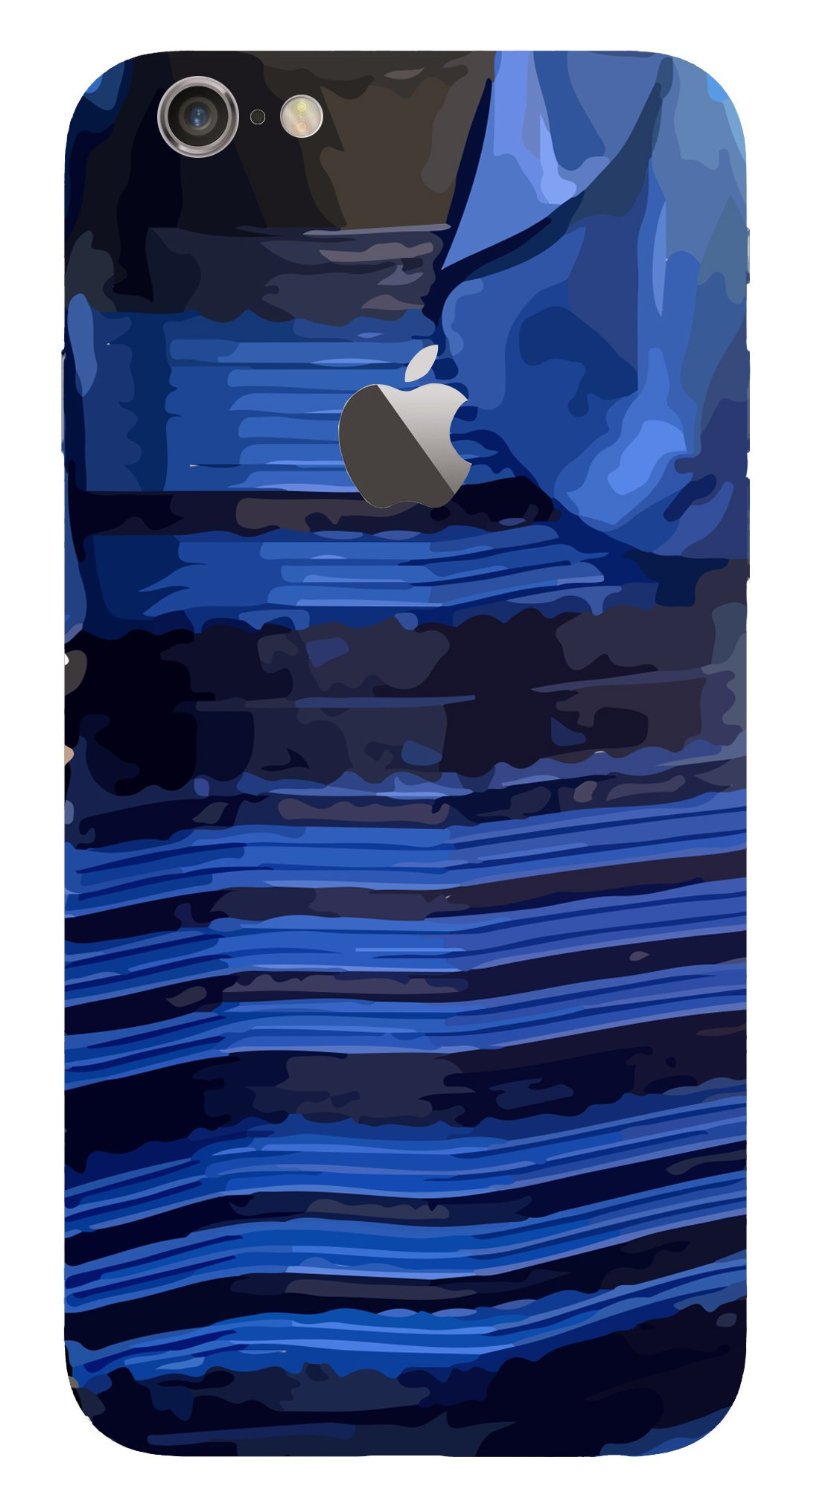 blueblack-whitgold-dress-iphone-6-case_01